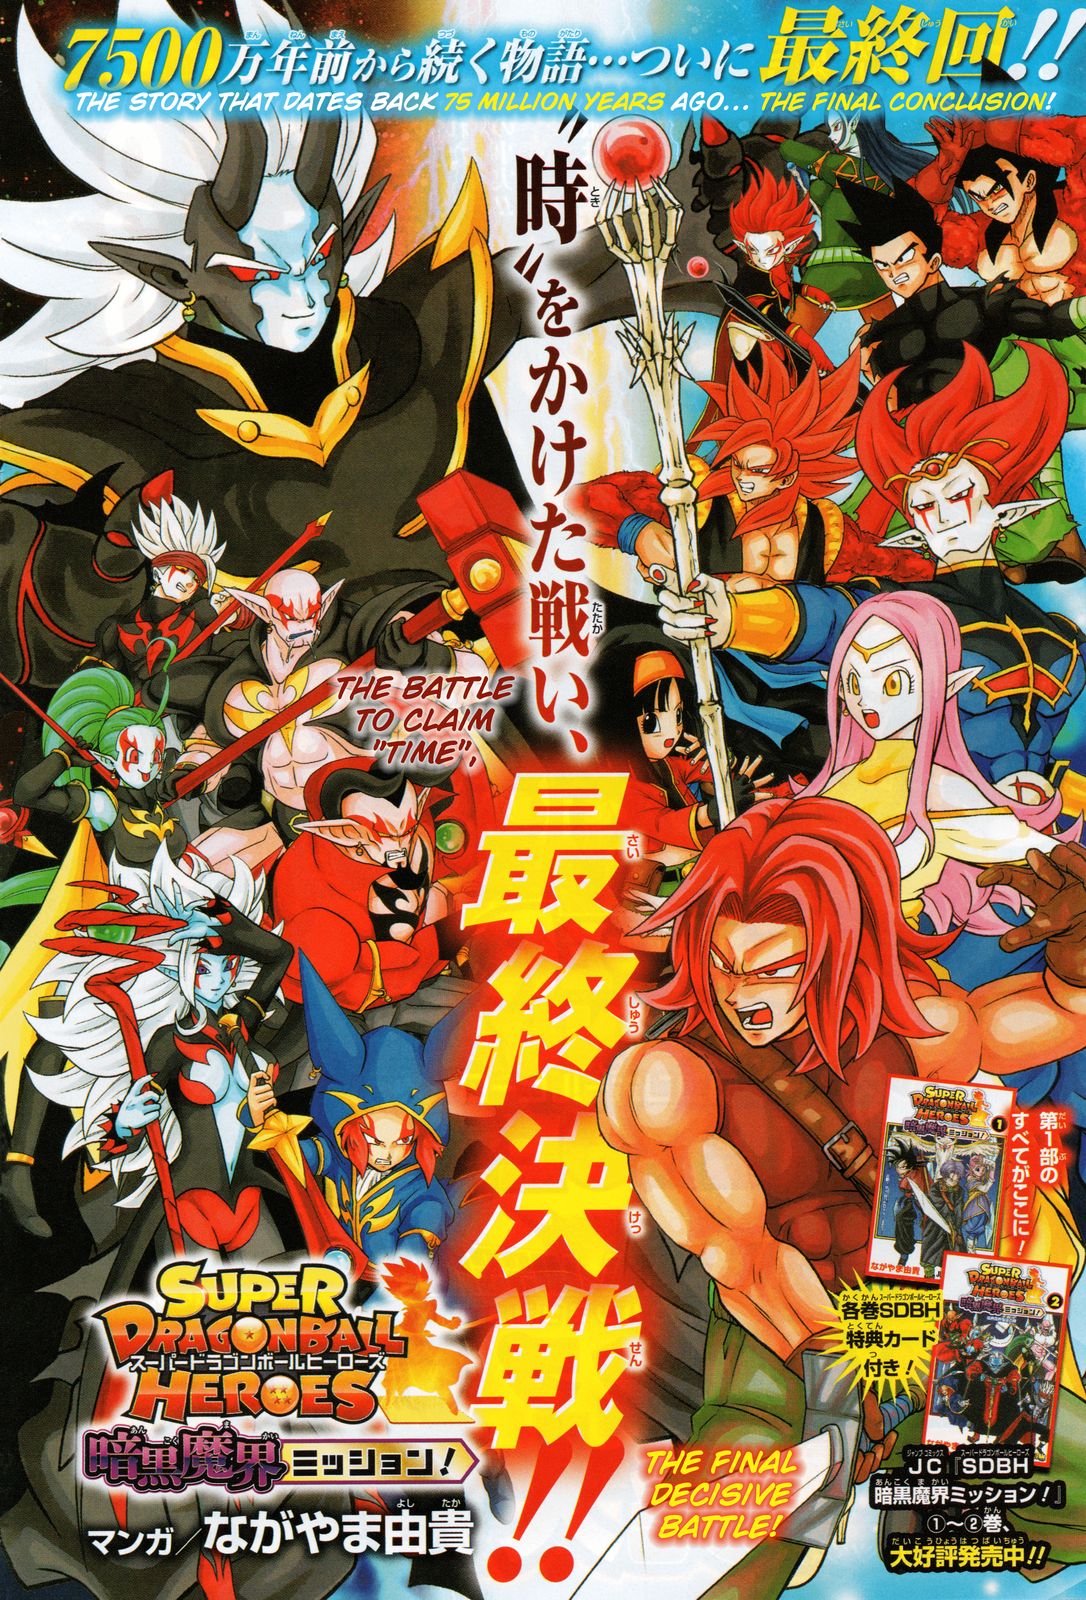 Super Dragon Ball Heroes: Dark Demon Realm Mission! Vol. 3 Ch. 17 The final decisive battle!!